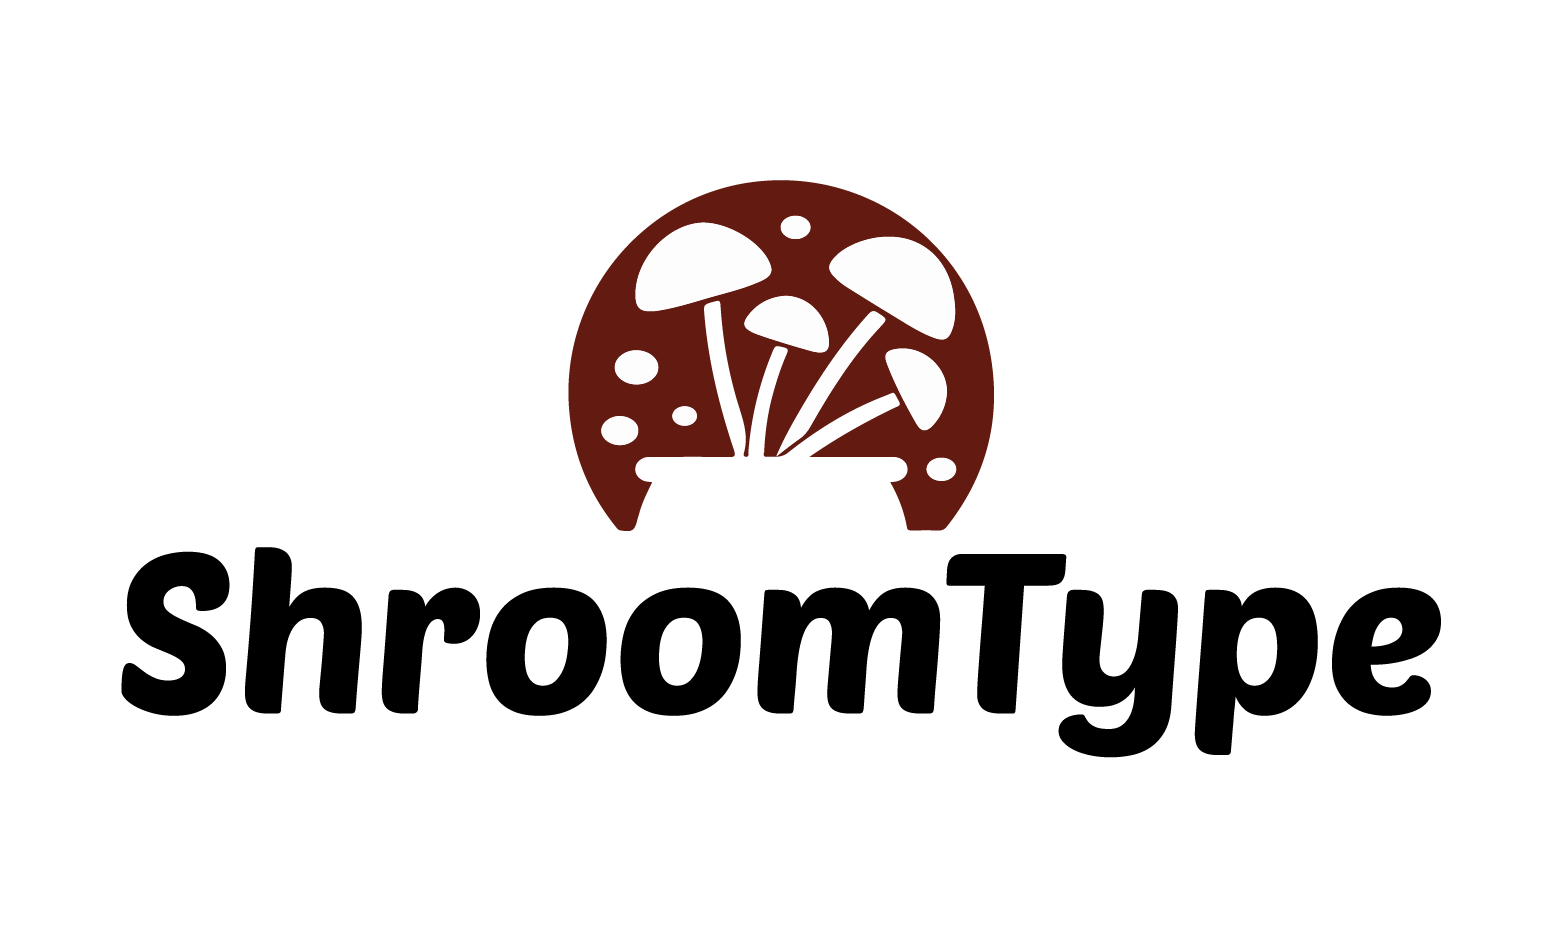 ShroomType.com - Creative brandable domain for sale